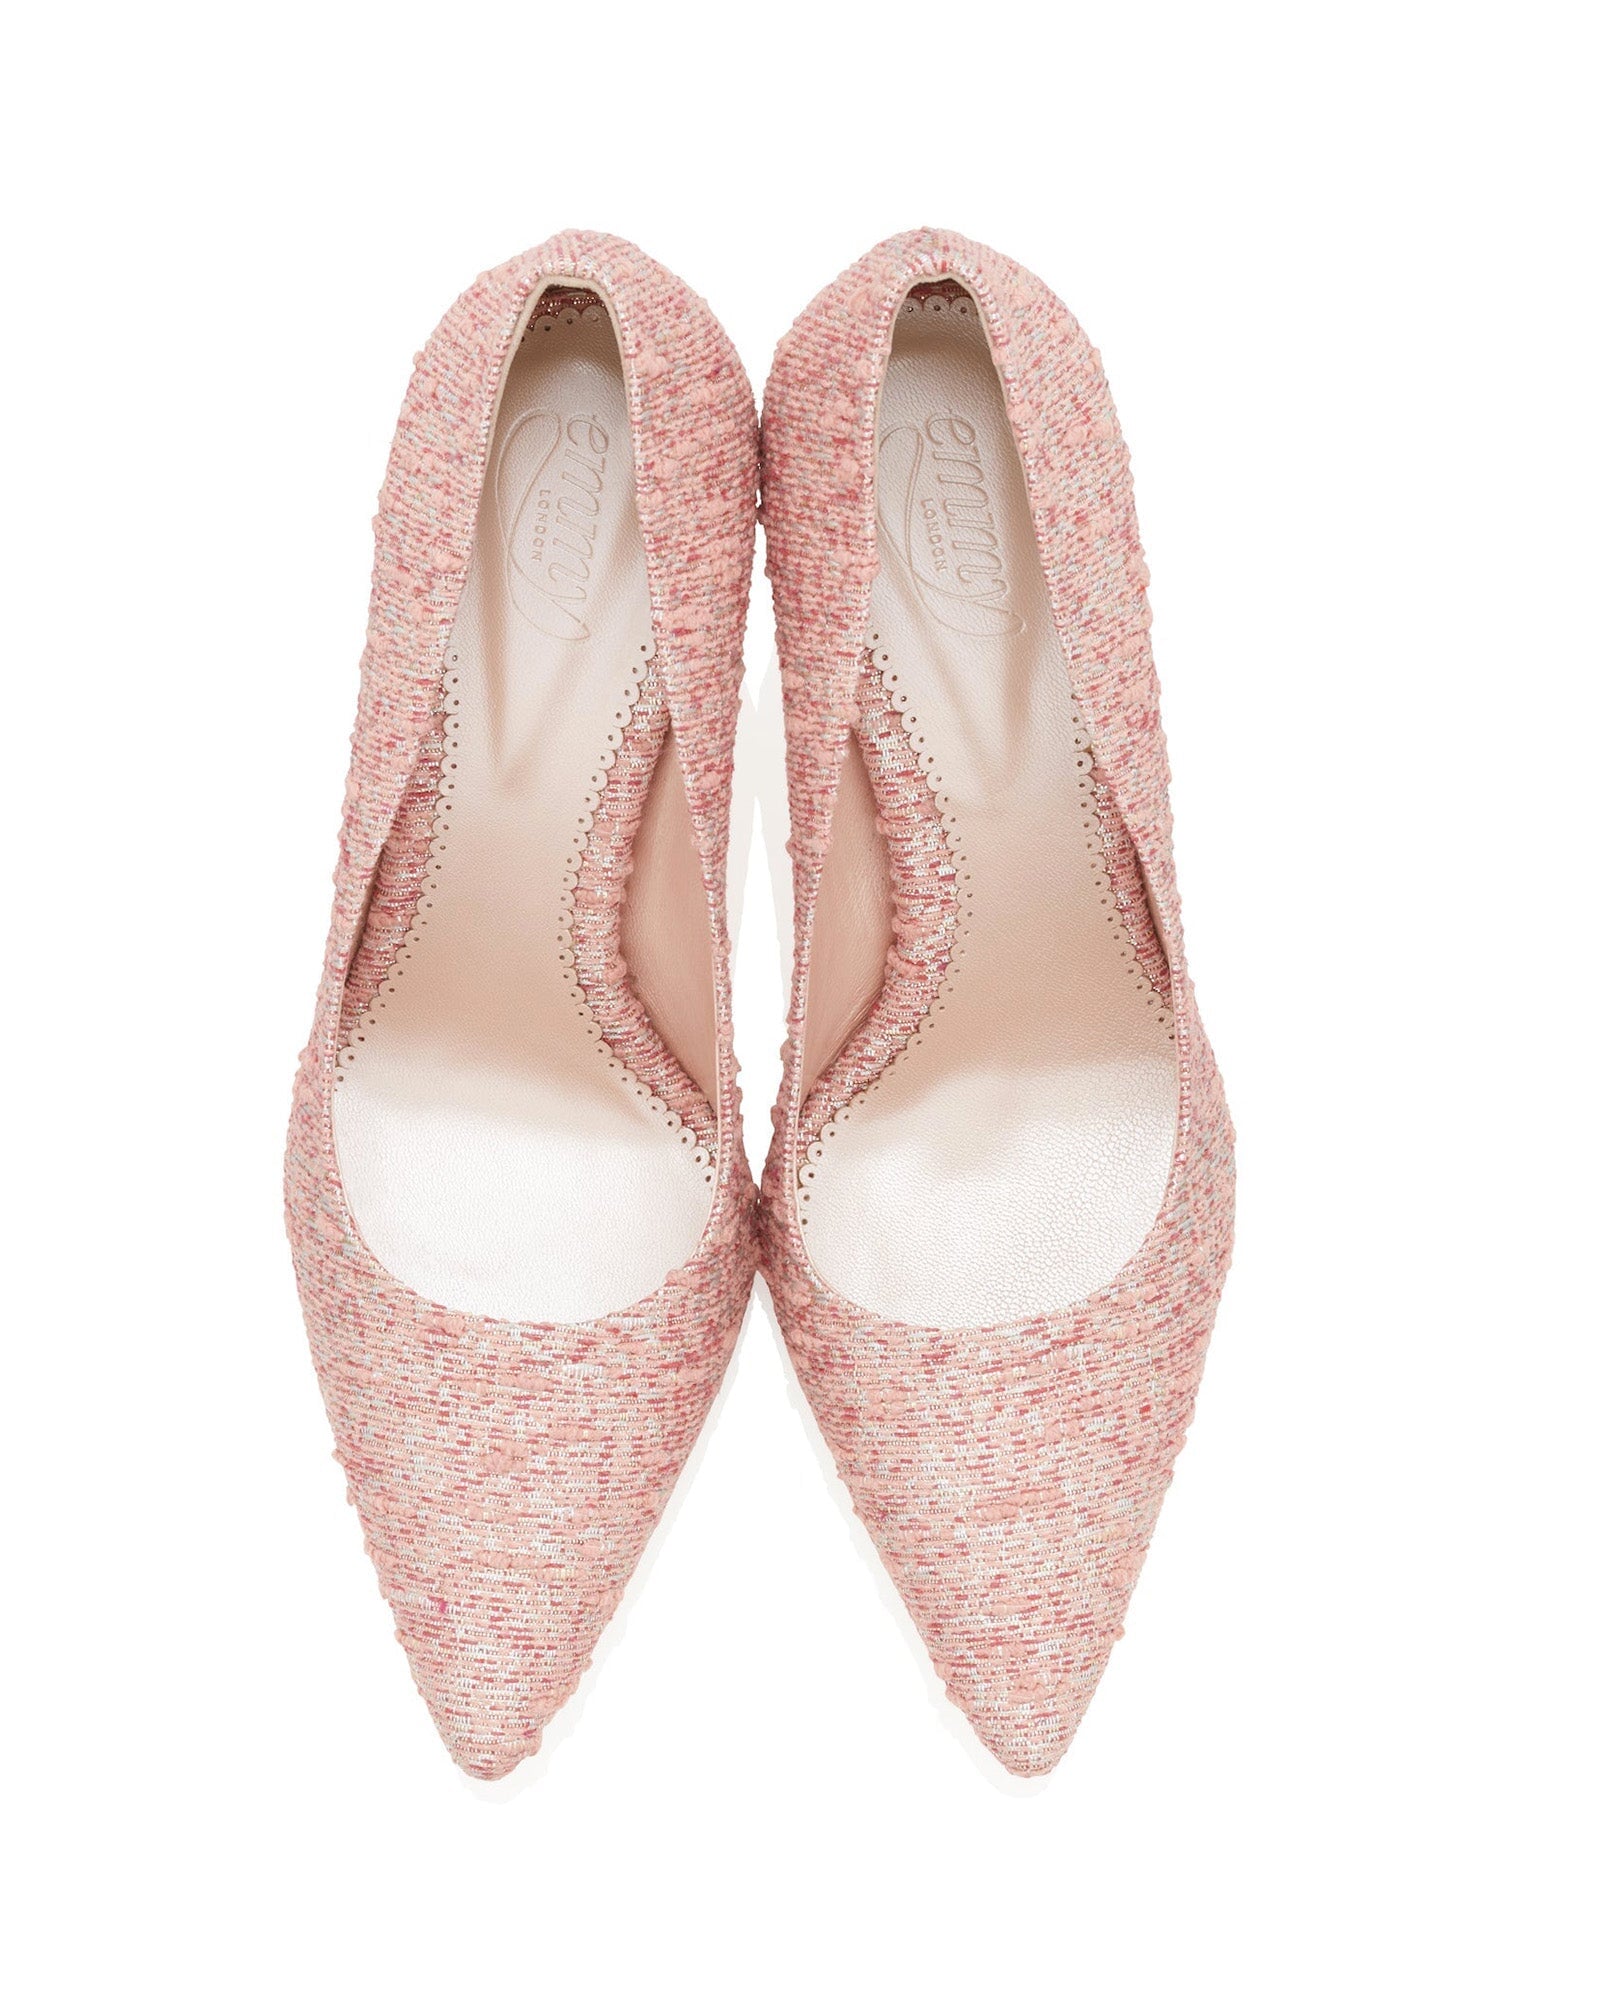 Claudia Bouclé Misty Rose Bridal Shoe Pink Pointed Court Shoe  image